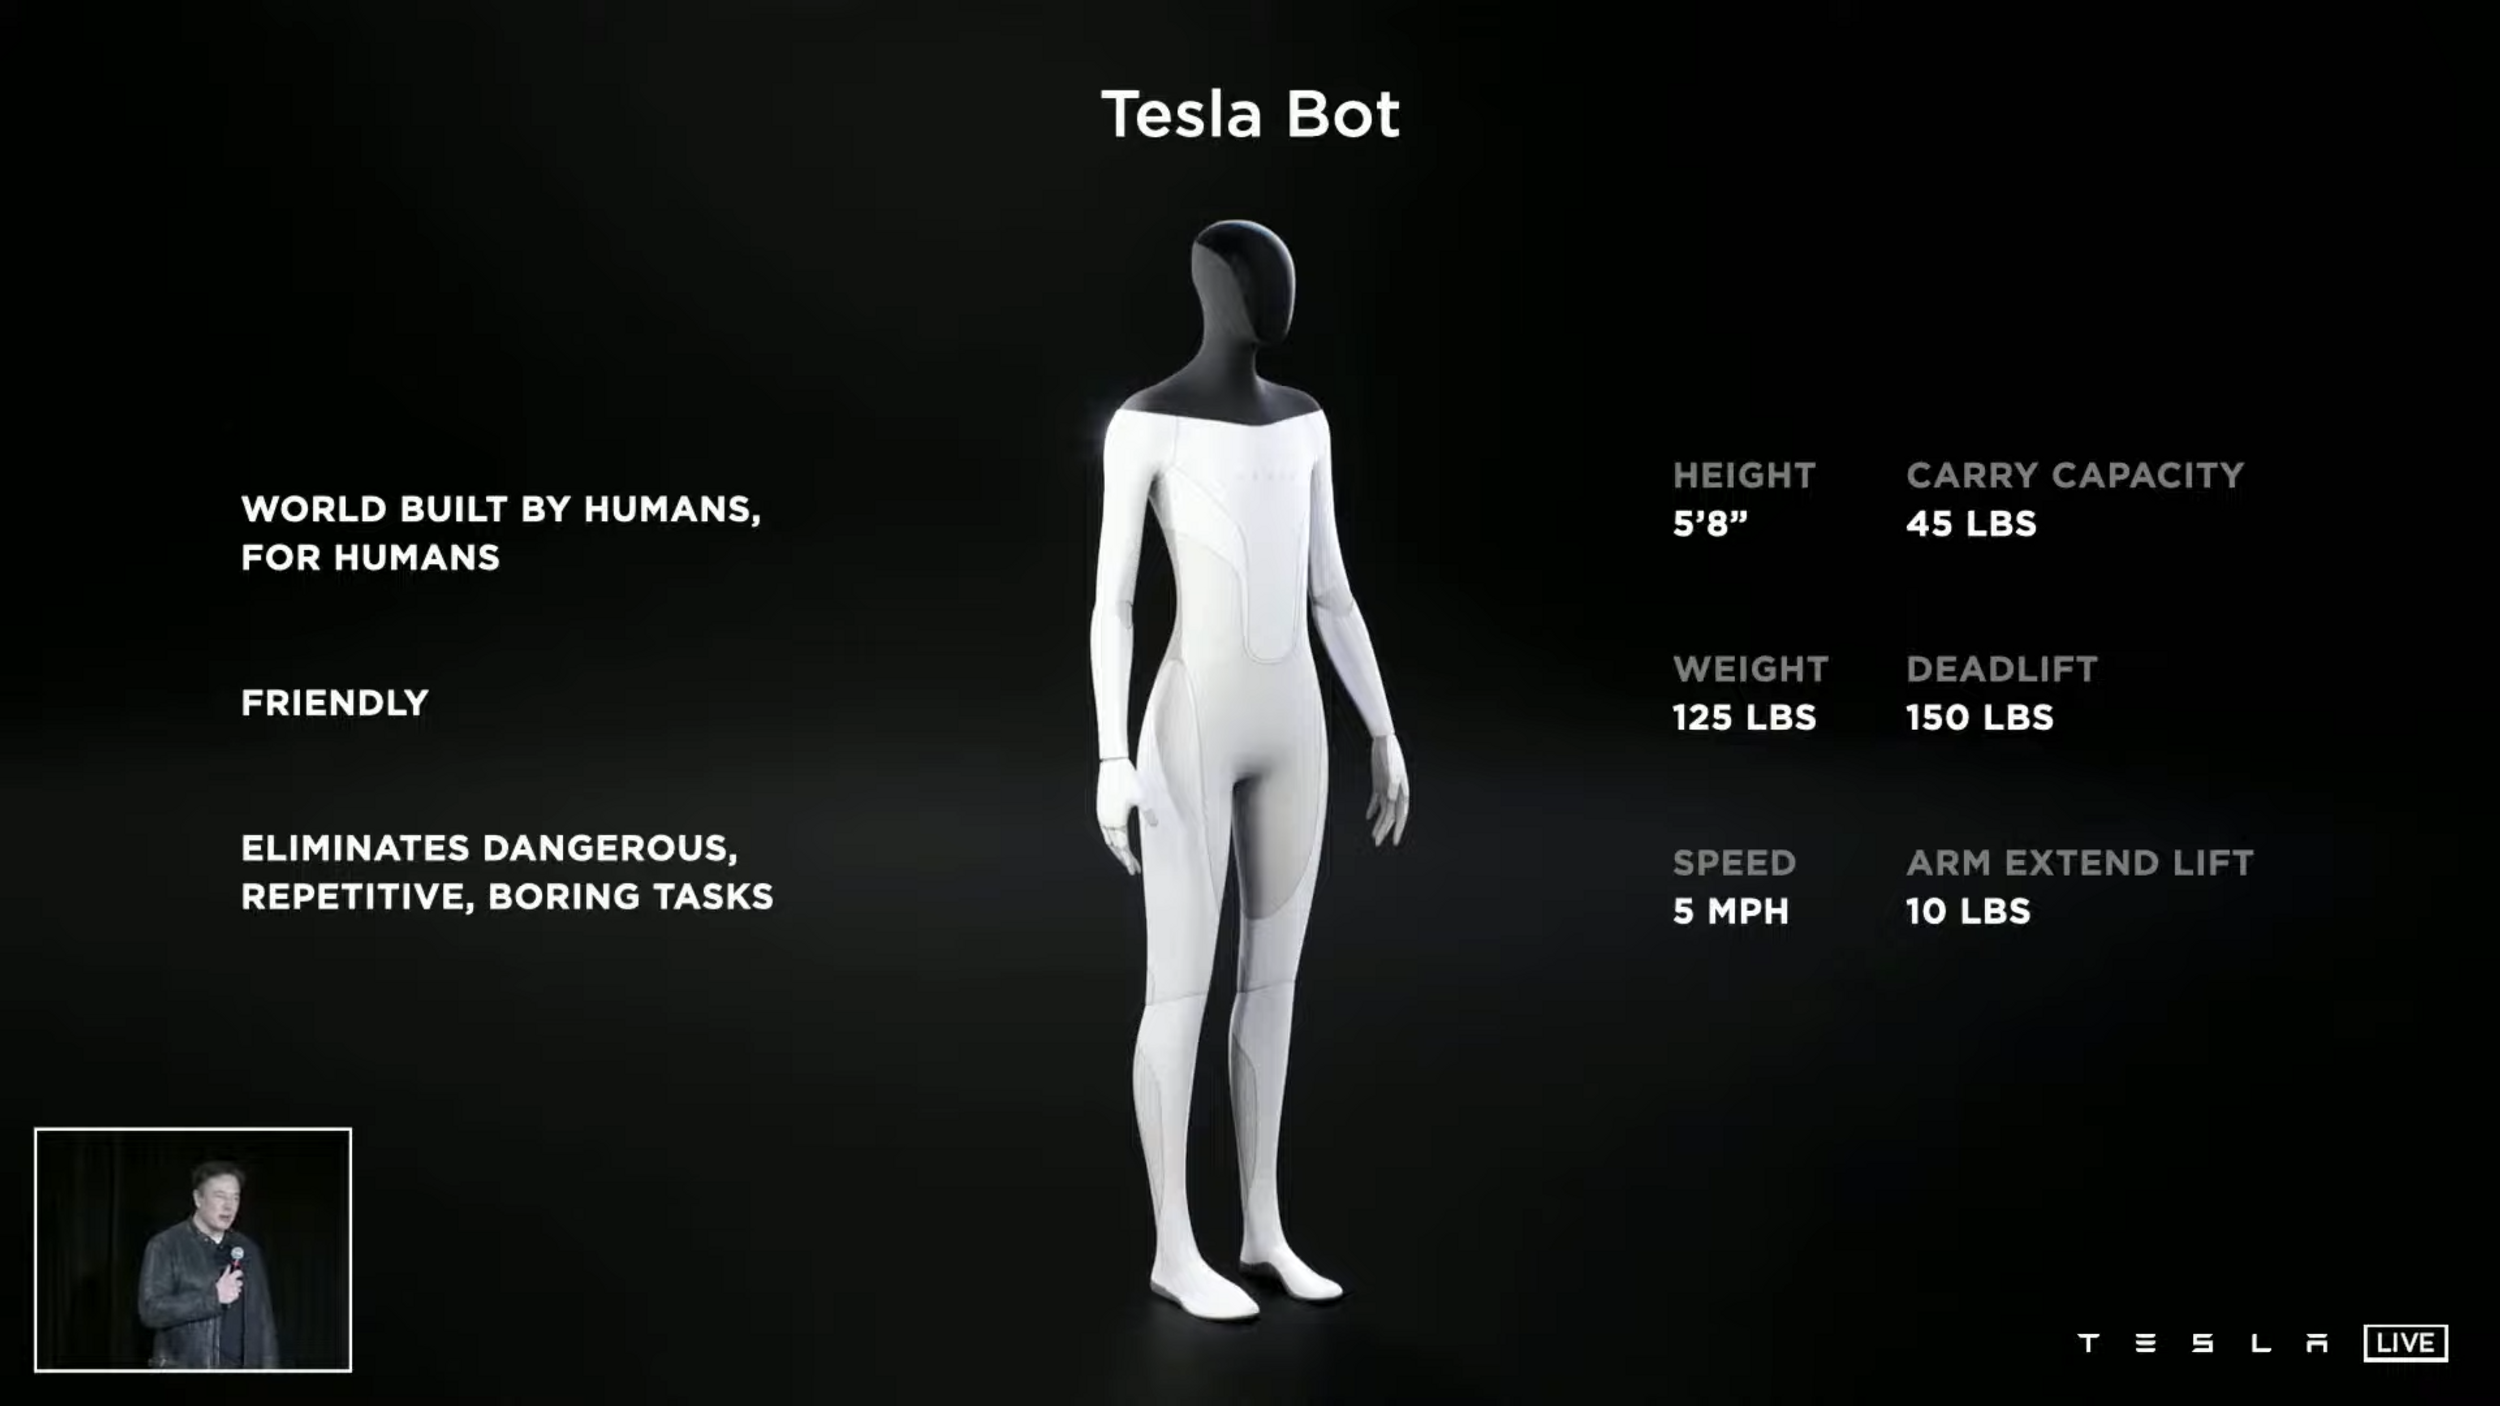 Concept image of Telsa Bot, a humanoid robot